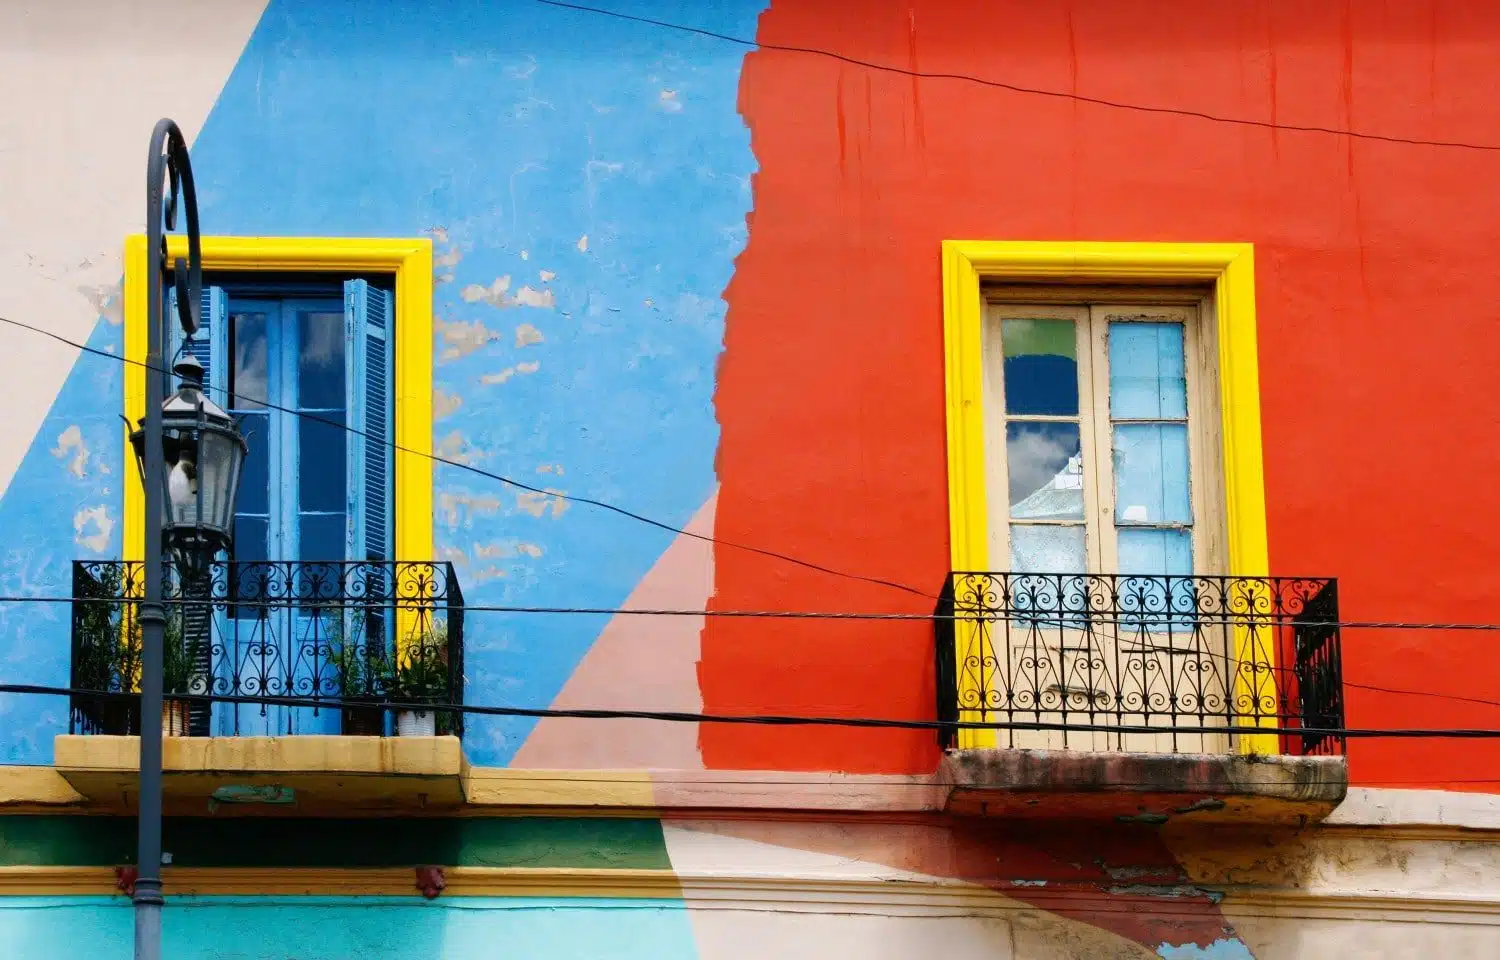  La Boca, Buenos Aires Colourful Houses